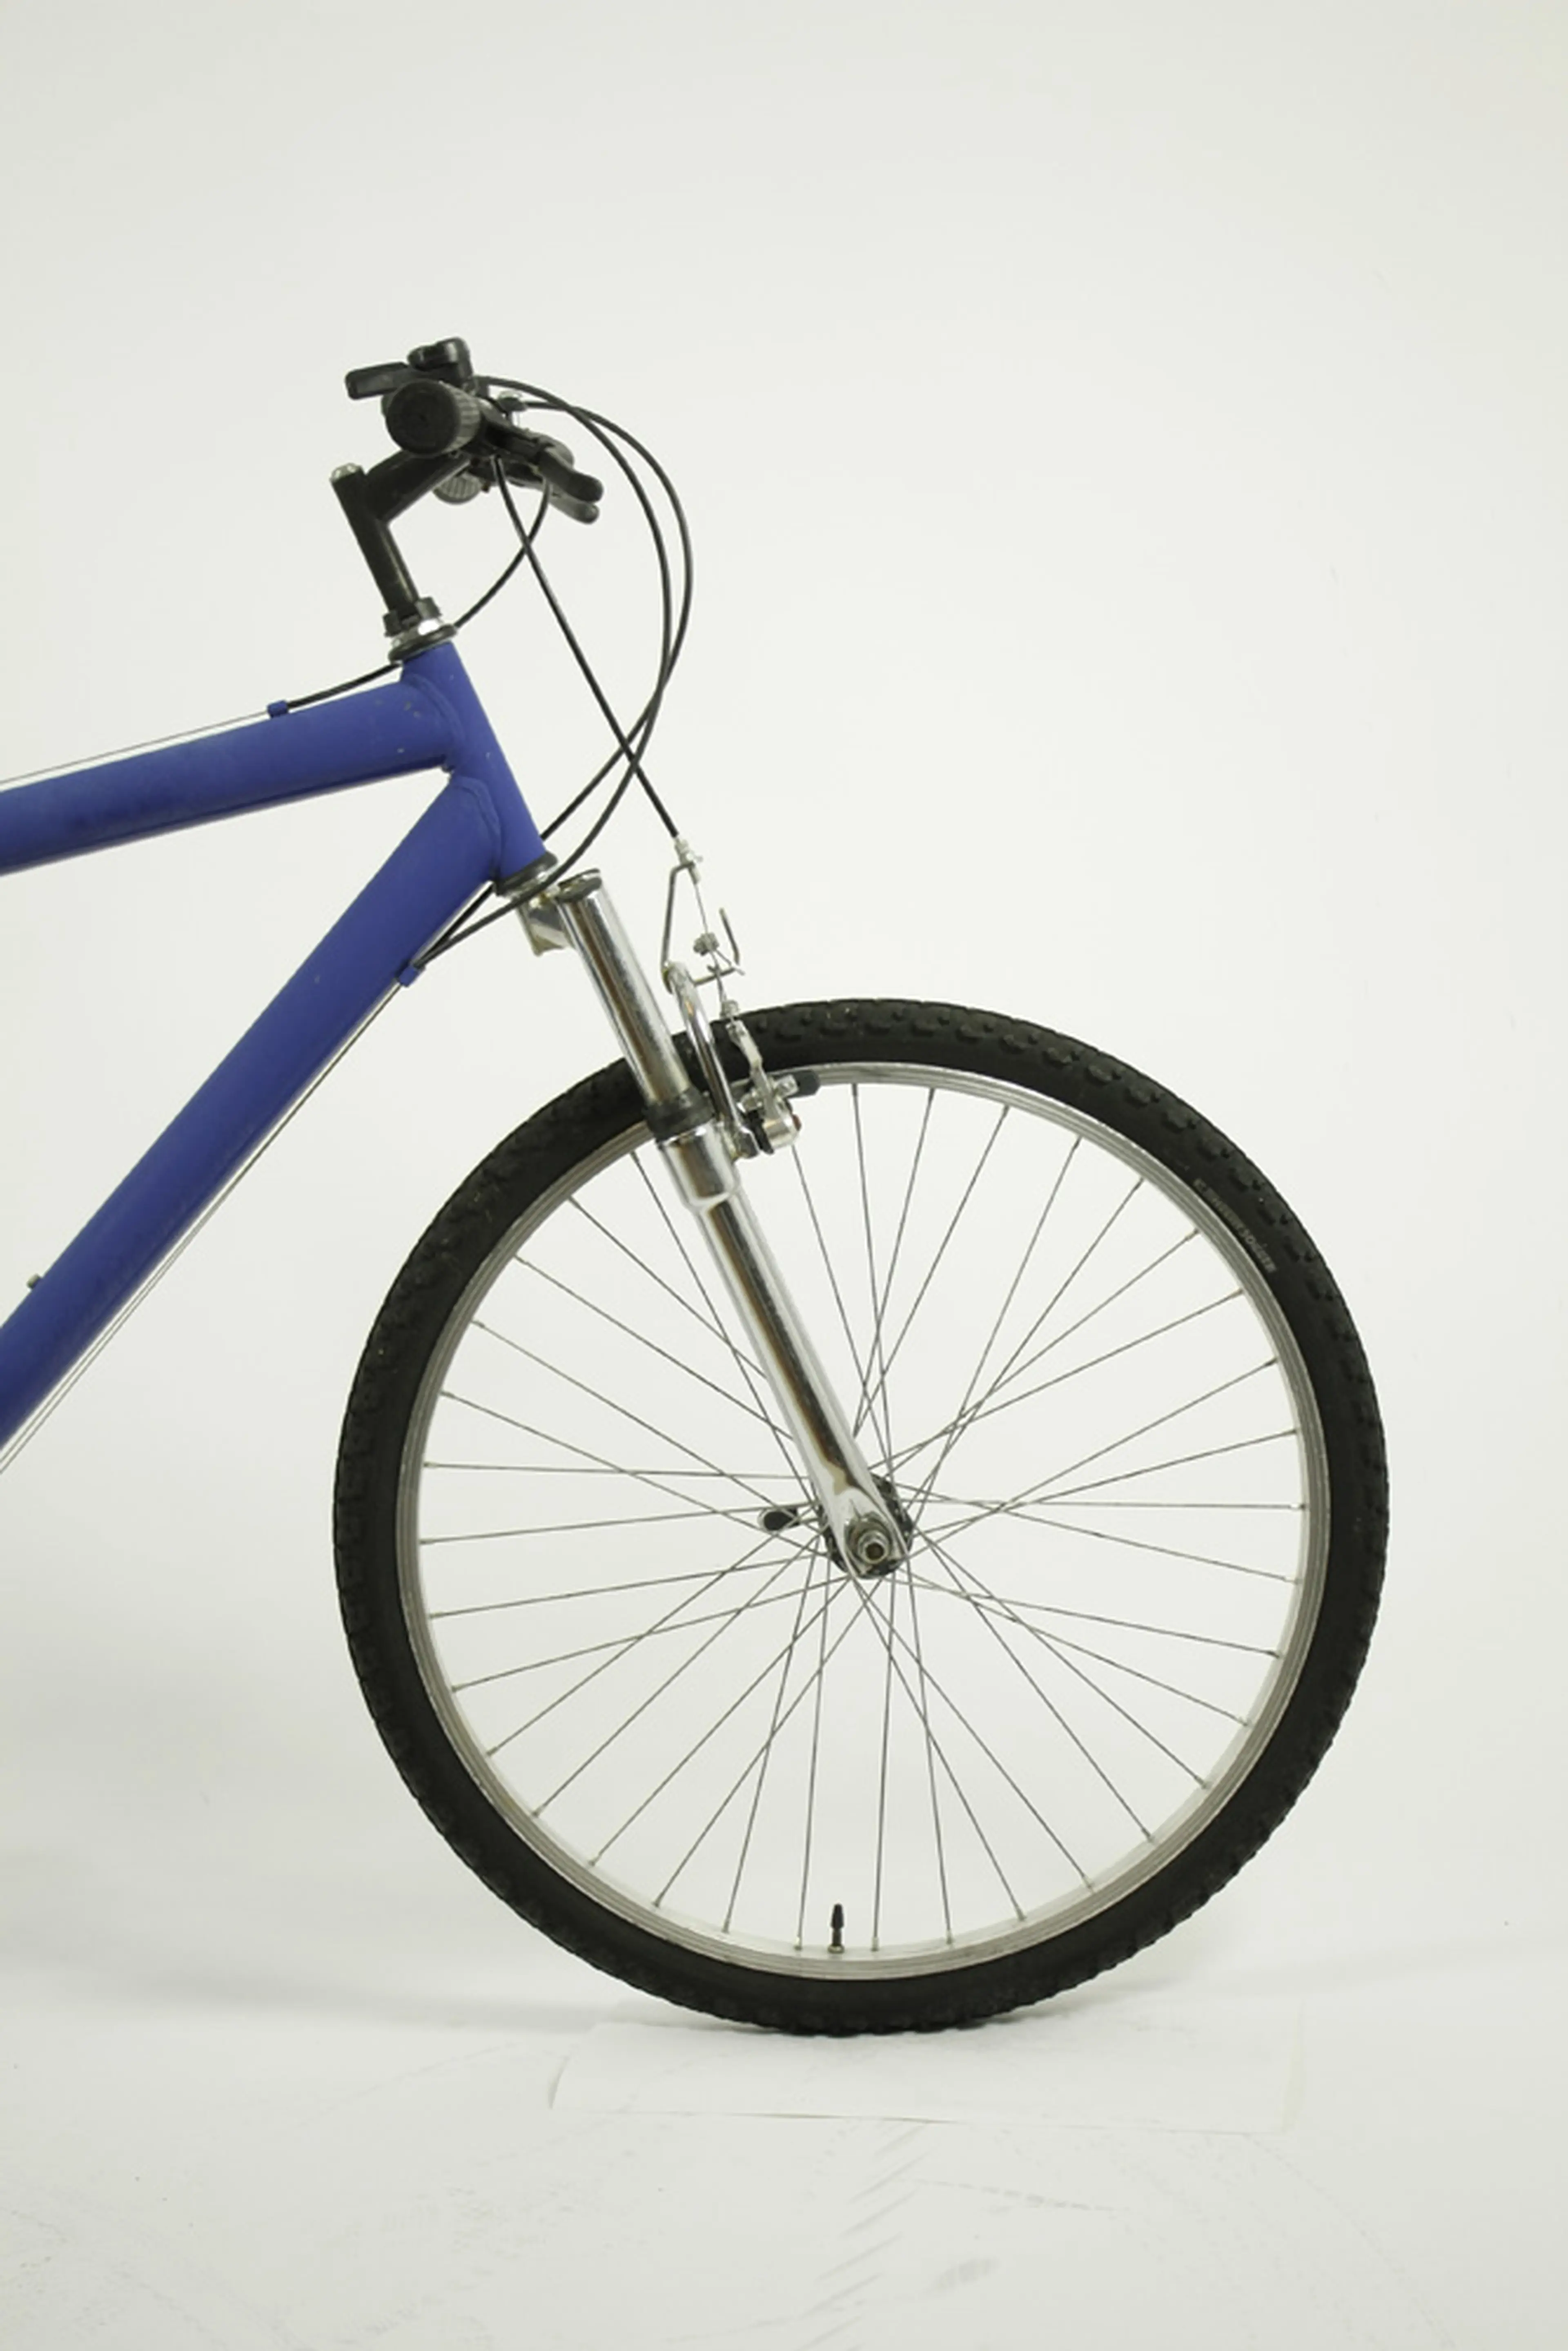 4. Bicicleta Falter Reconditionata